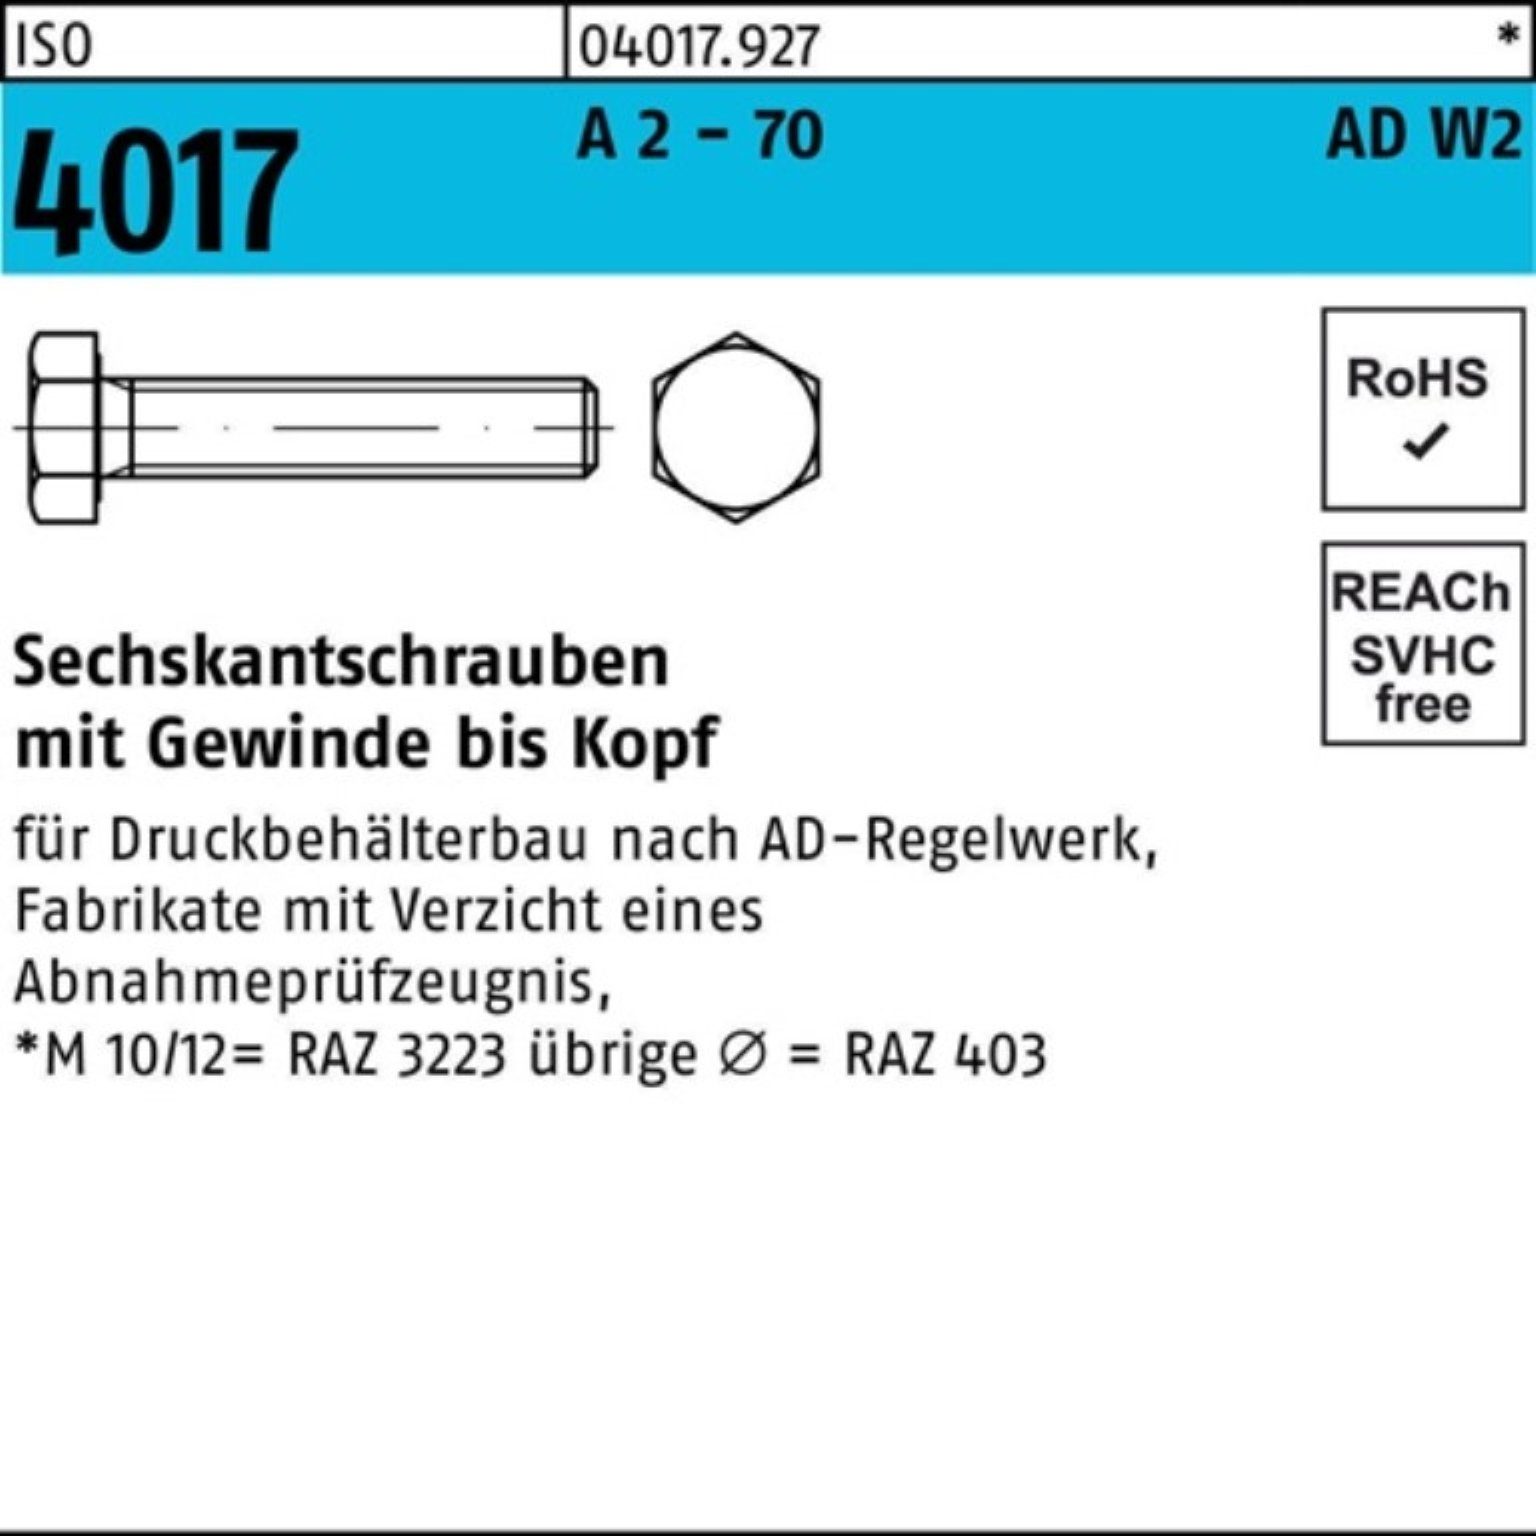 Bufab Sechskantschraube 100er Pack Sechskantschraube ISO 4017 VG M16x 45 A 2 - 70 AD-W2 25 St